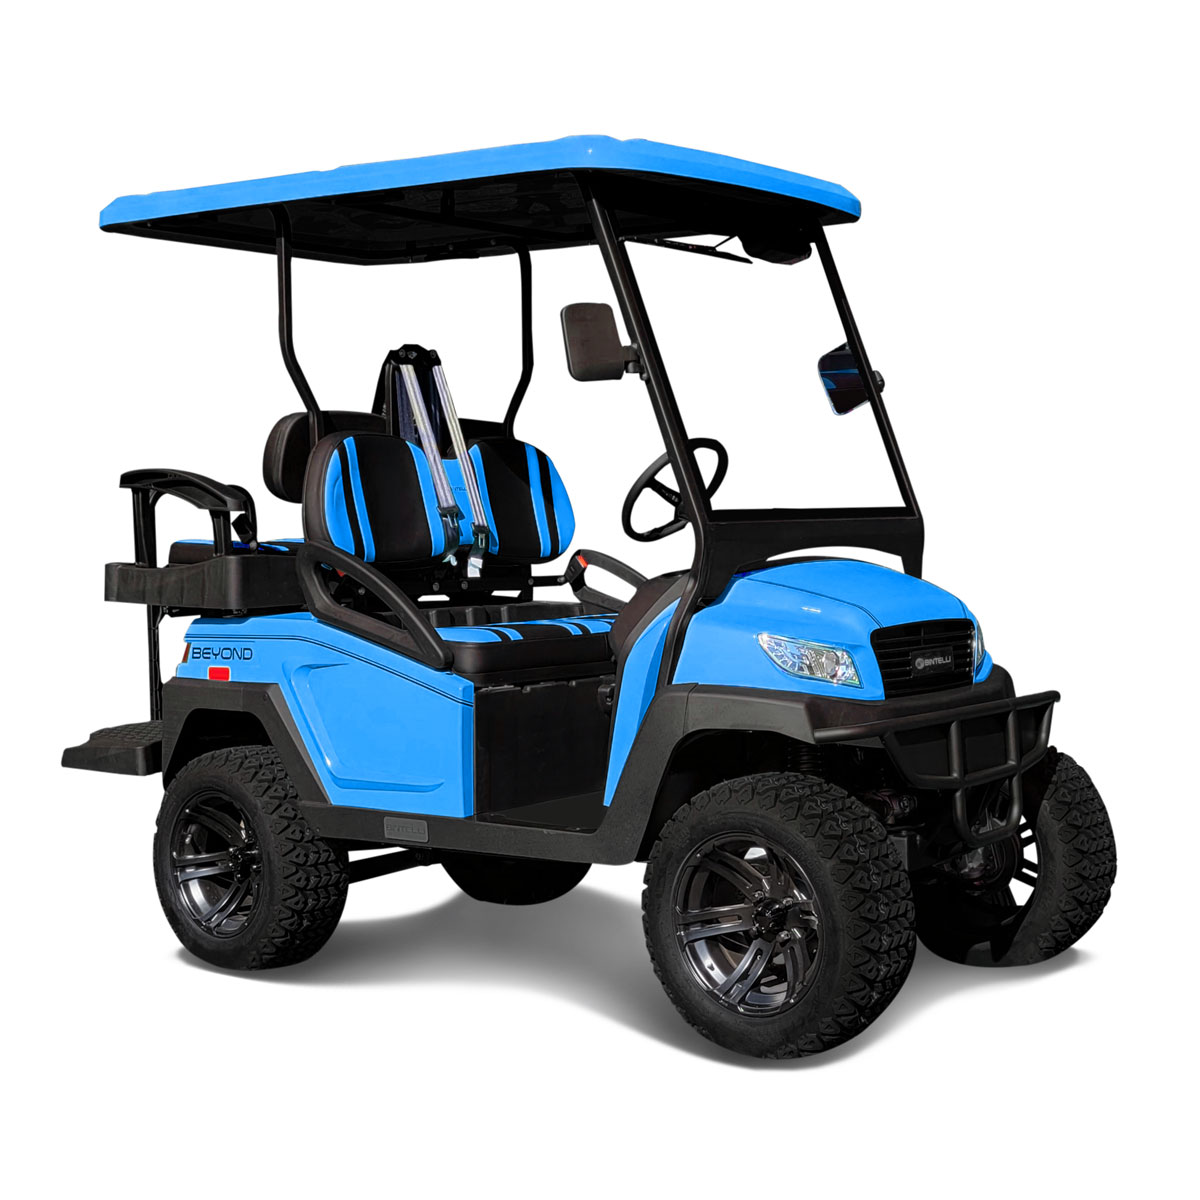 Bintelli Beyond Lifted 4PR street legal golf cart in Ocean Blue